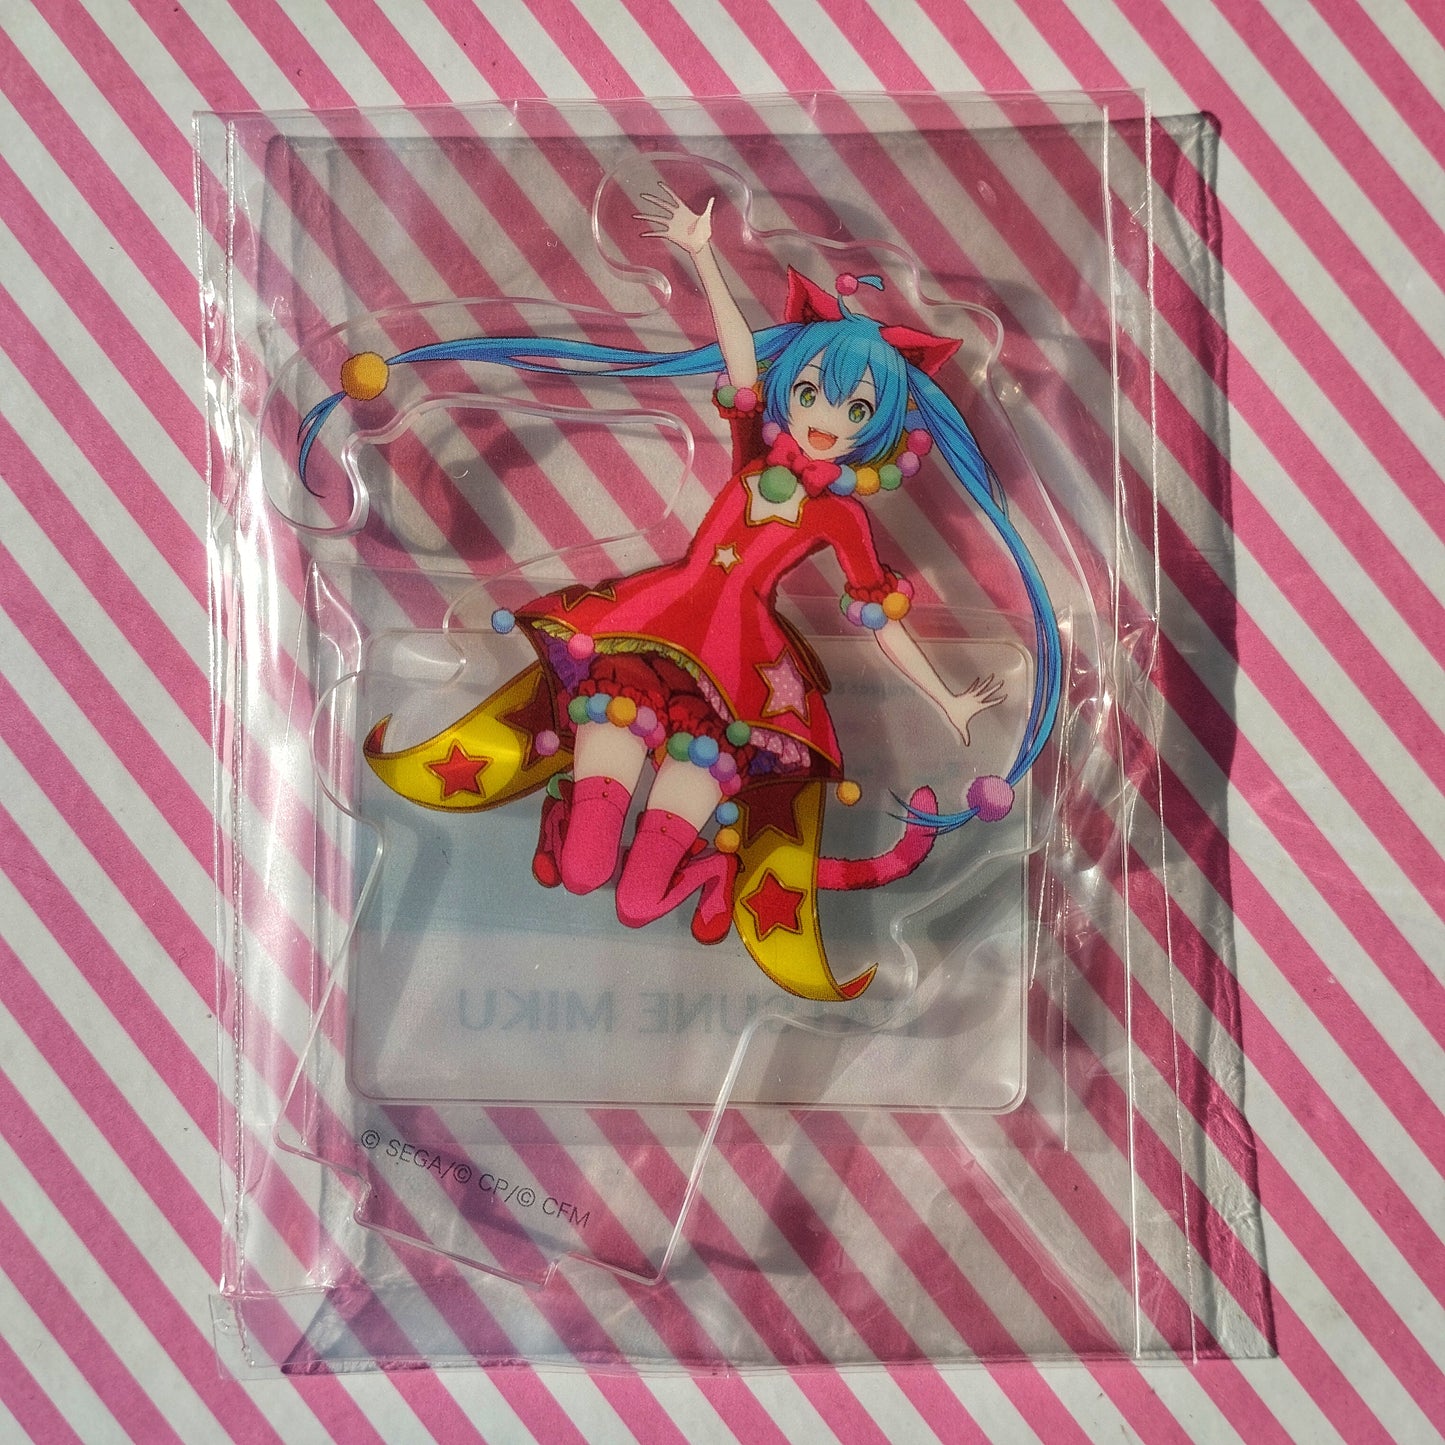 Hatsune Miku Mini Acrylic Stand - Project Sekai Colorful Stage! ft. Hatsune Miku